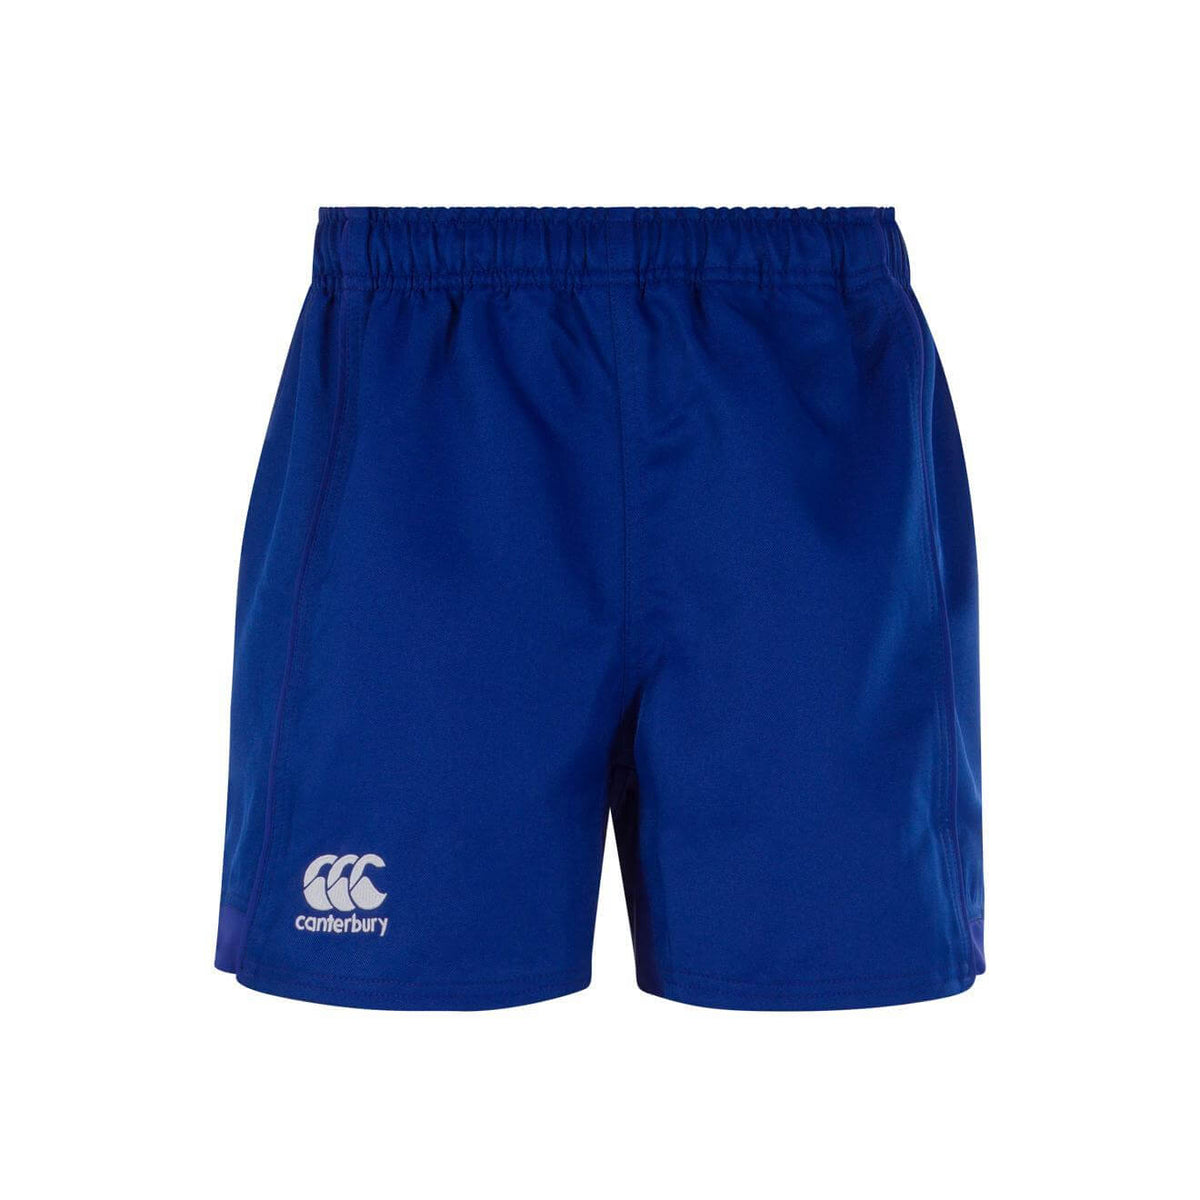 Canterbury Advantage Rugby Shorts- Royal Blue |Shorts | Canterbury | Absolute Rugby